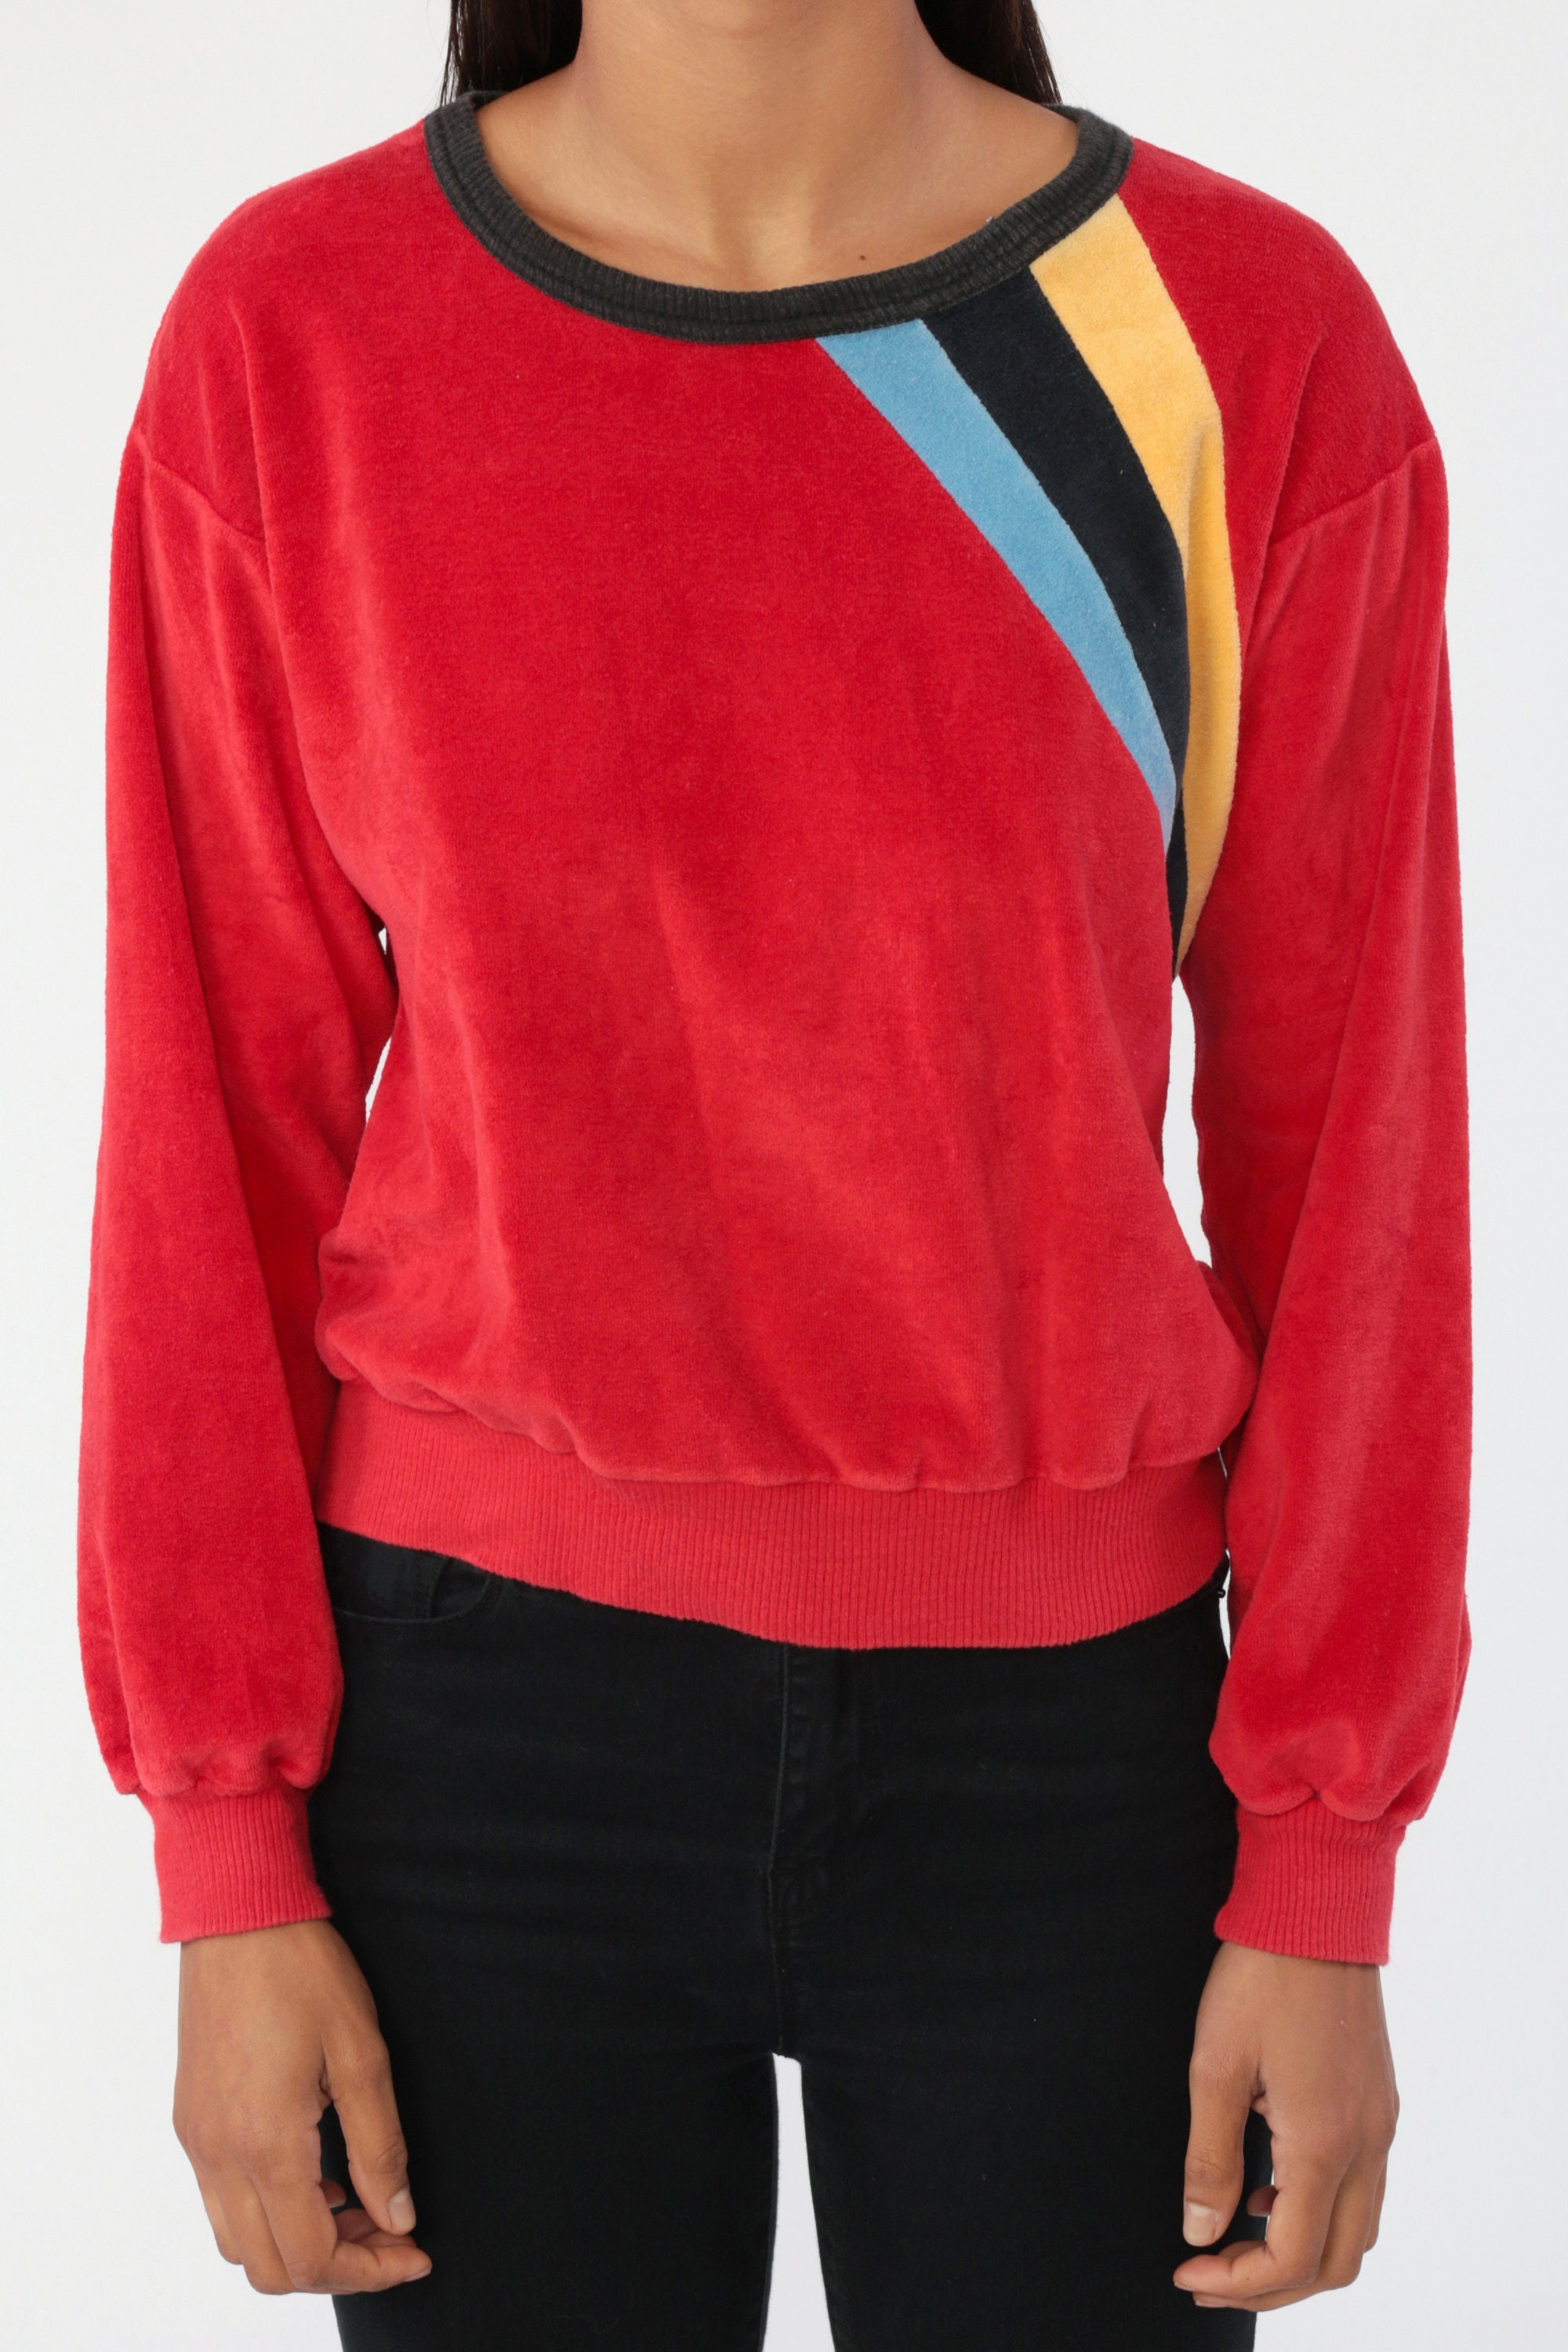 Red Velour Sweatshirt 80s Sweatshirt Striped Sweatshirt Long Sleeve